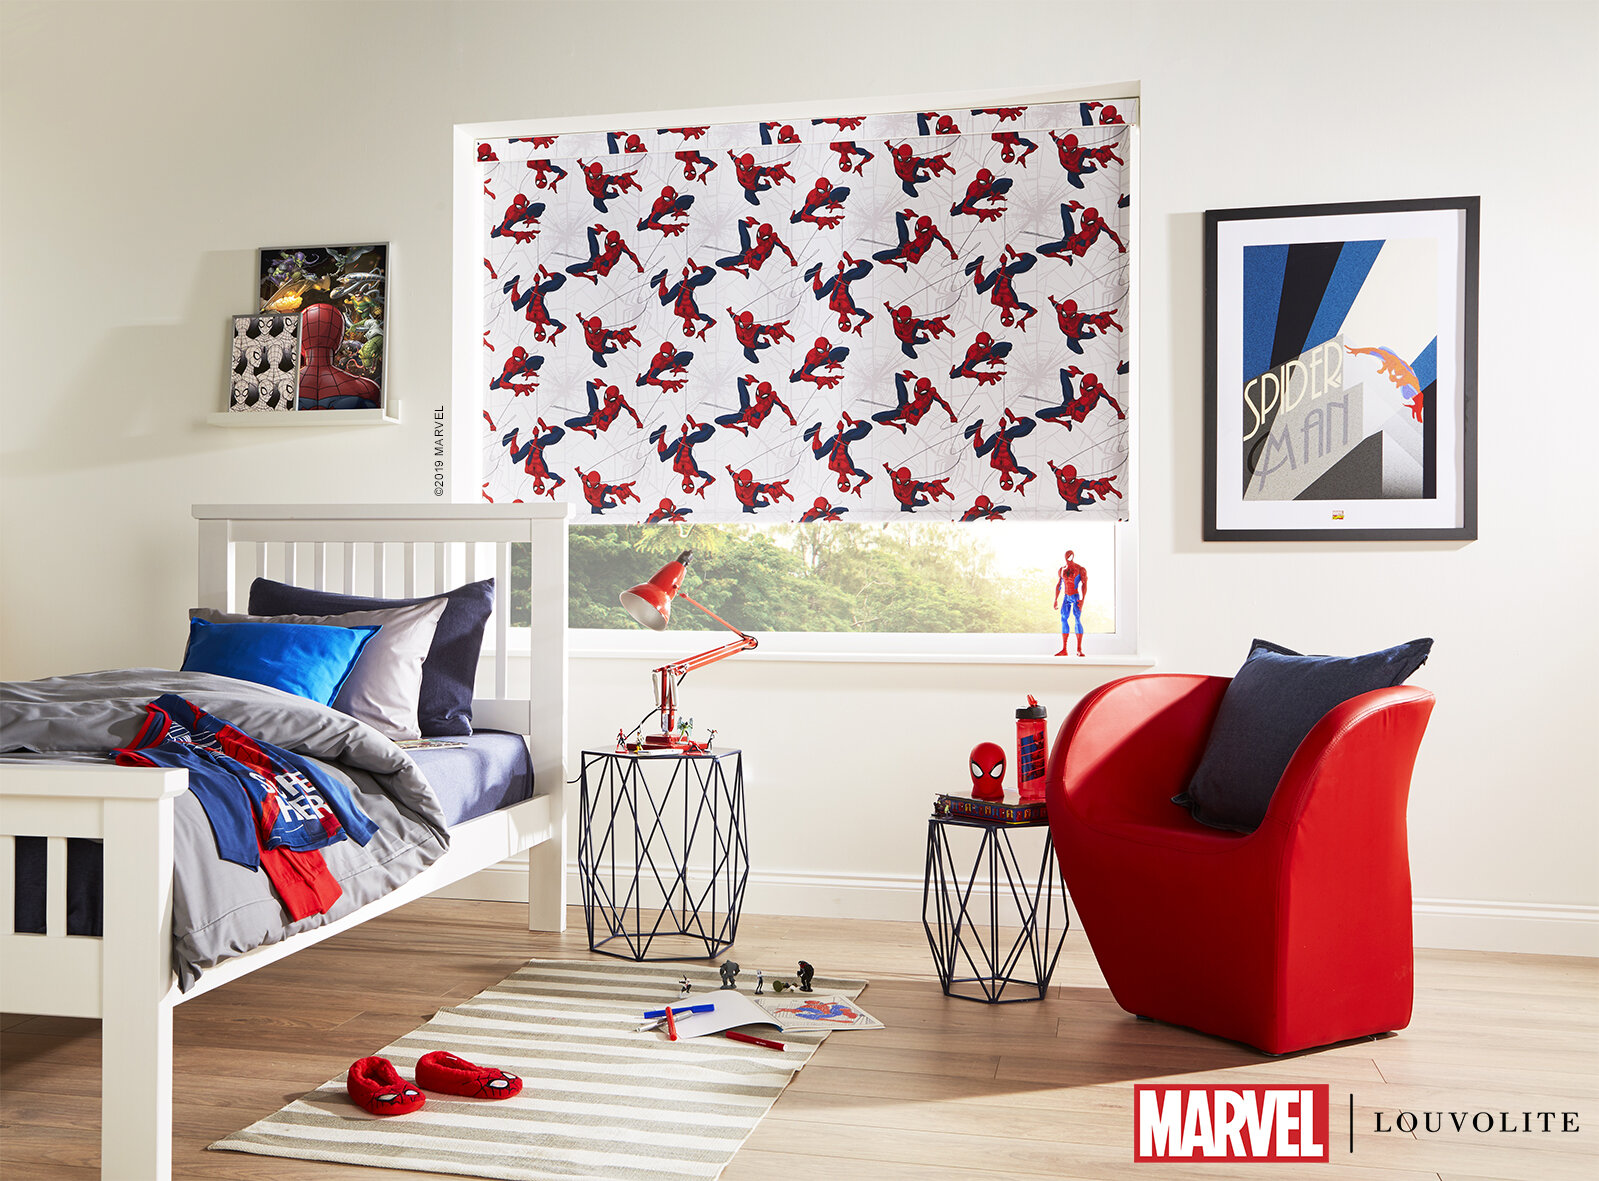 LL_2019_Marvel-Spiderman_70mm_Bed_Main-Open_TM_Mail.jpg